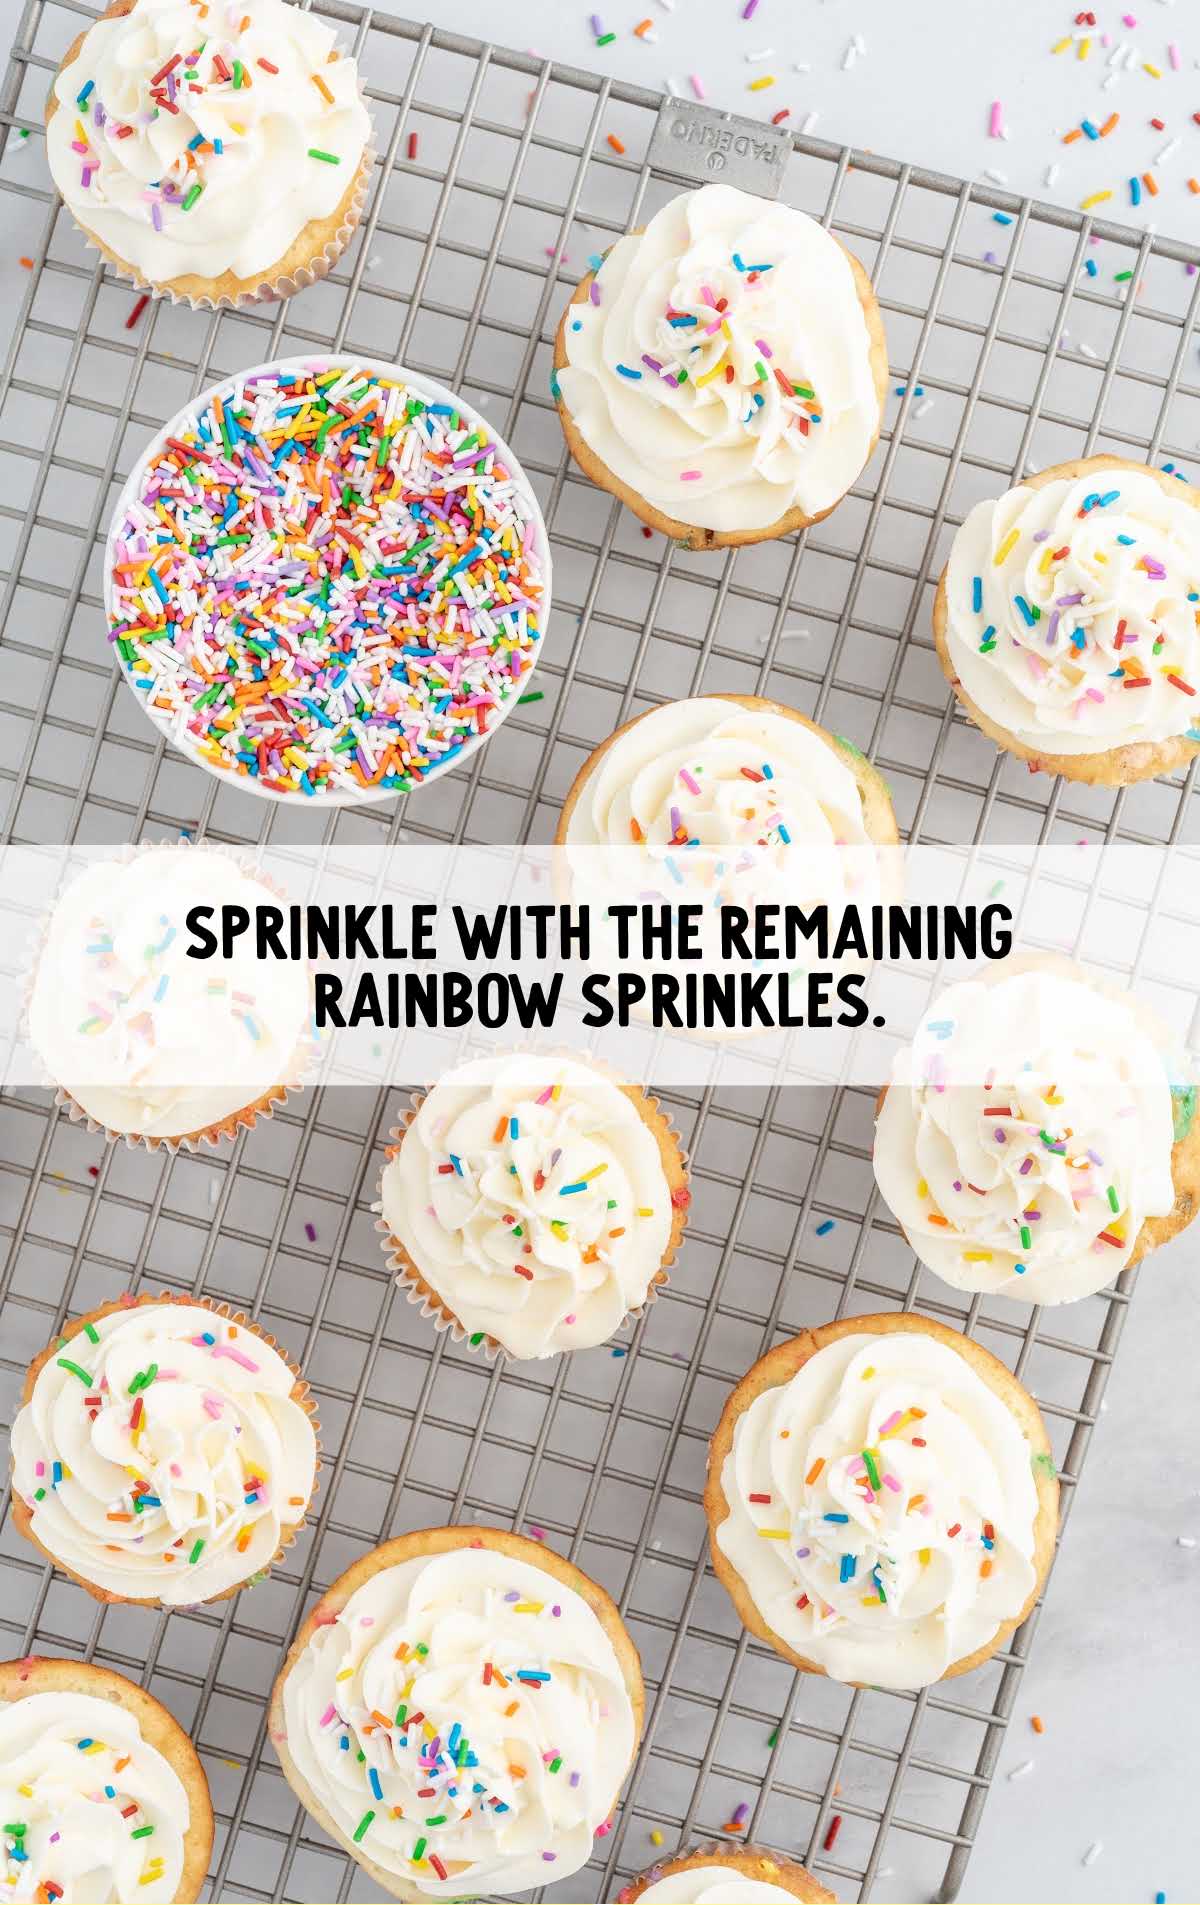 rainbow sprinkles sprinkled on top of the cupcakes